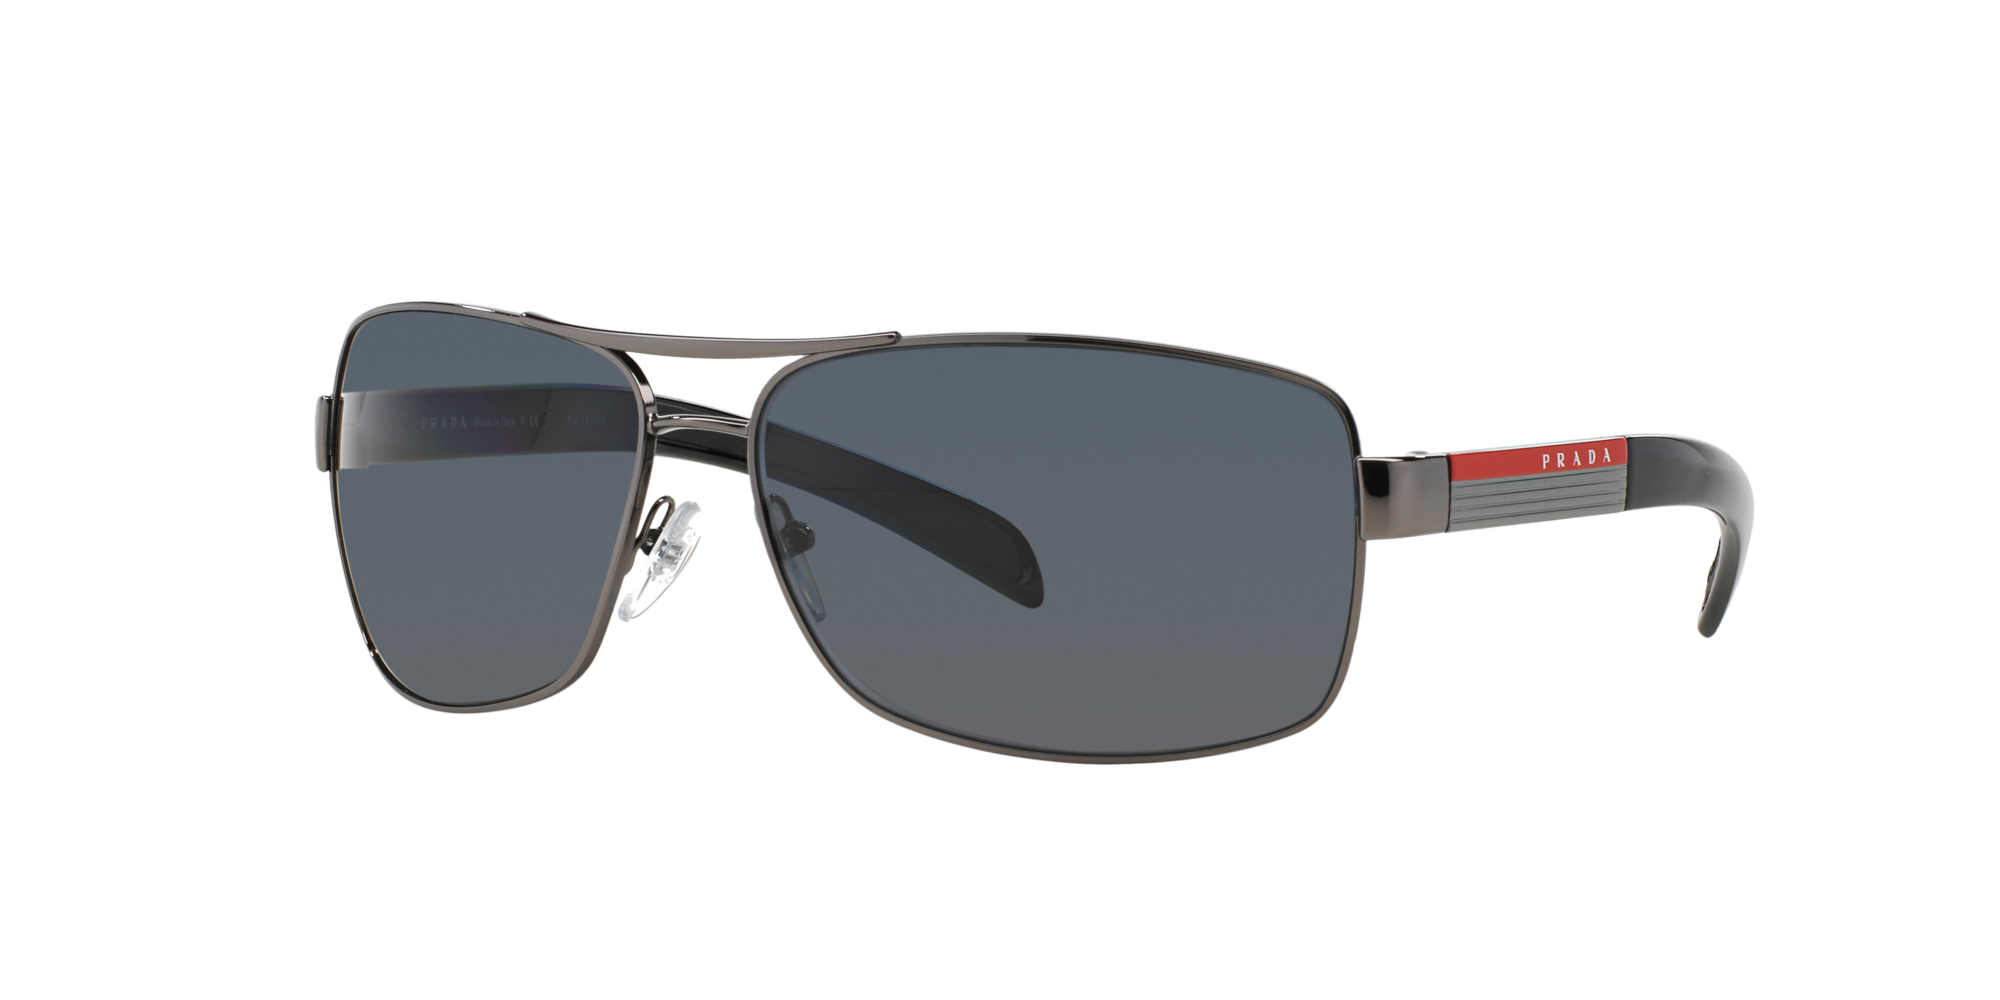 ps541s prada sunglasses